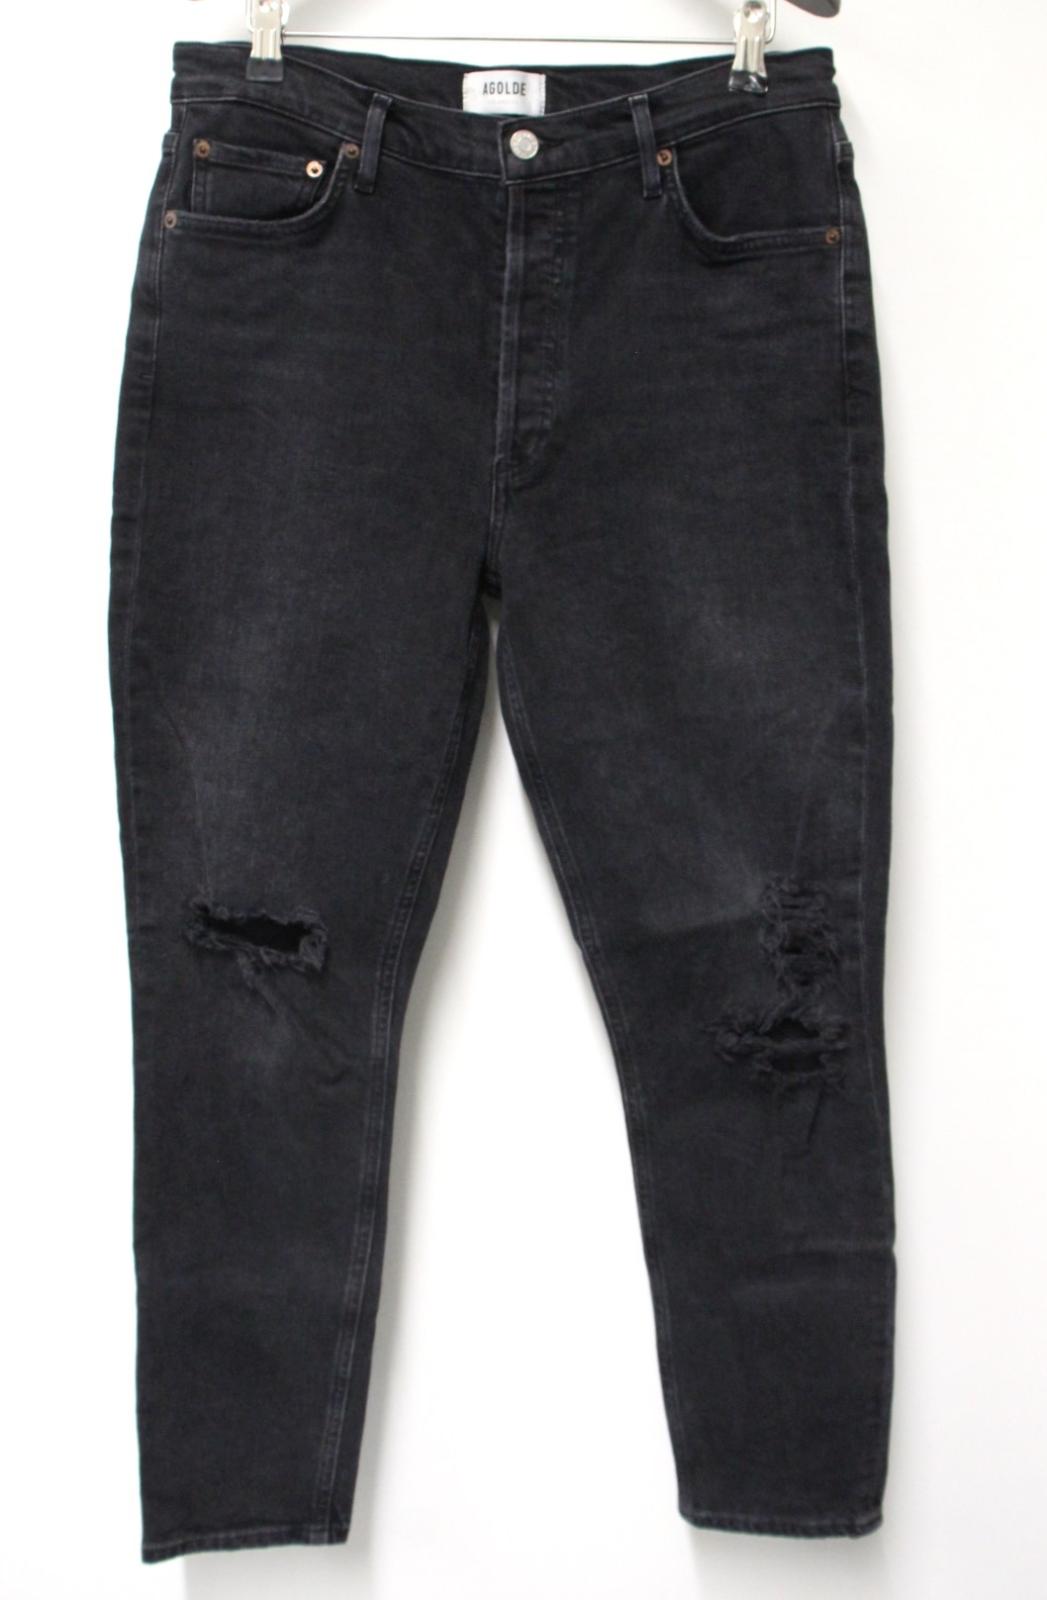 AGOLDE Ladies Black Cotton Blend High-Rise Slim Distressed Nico Jeans W30 L26